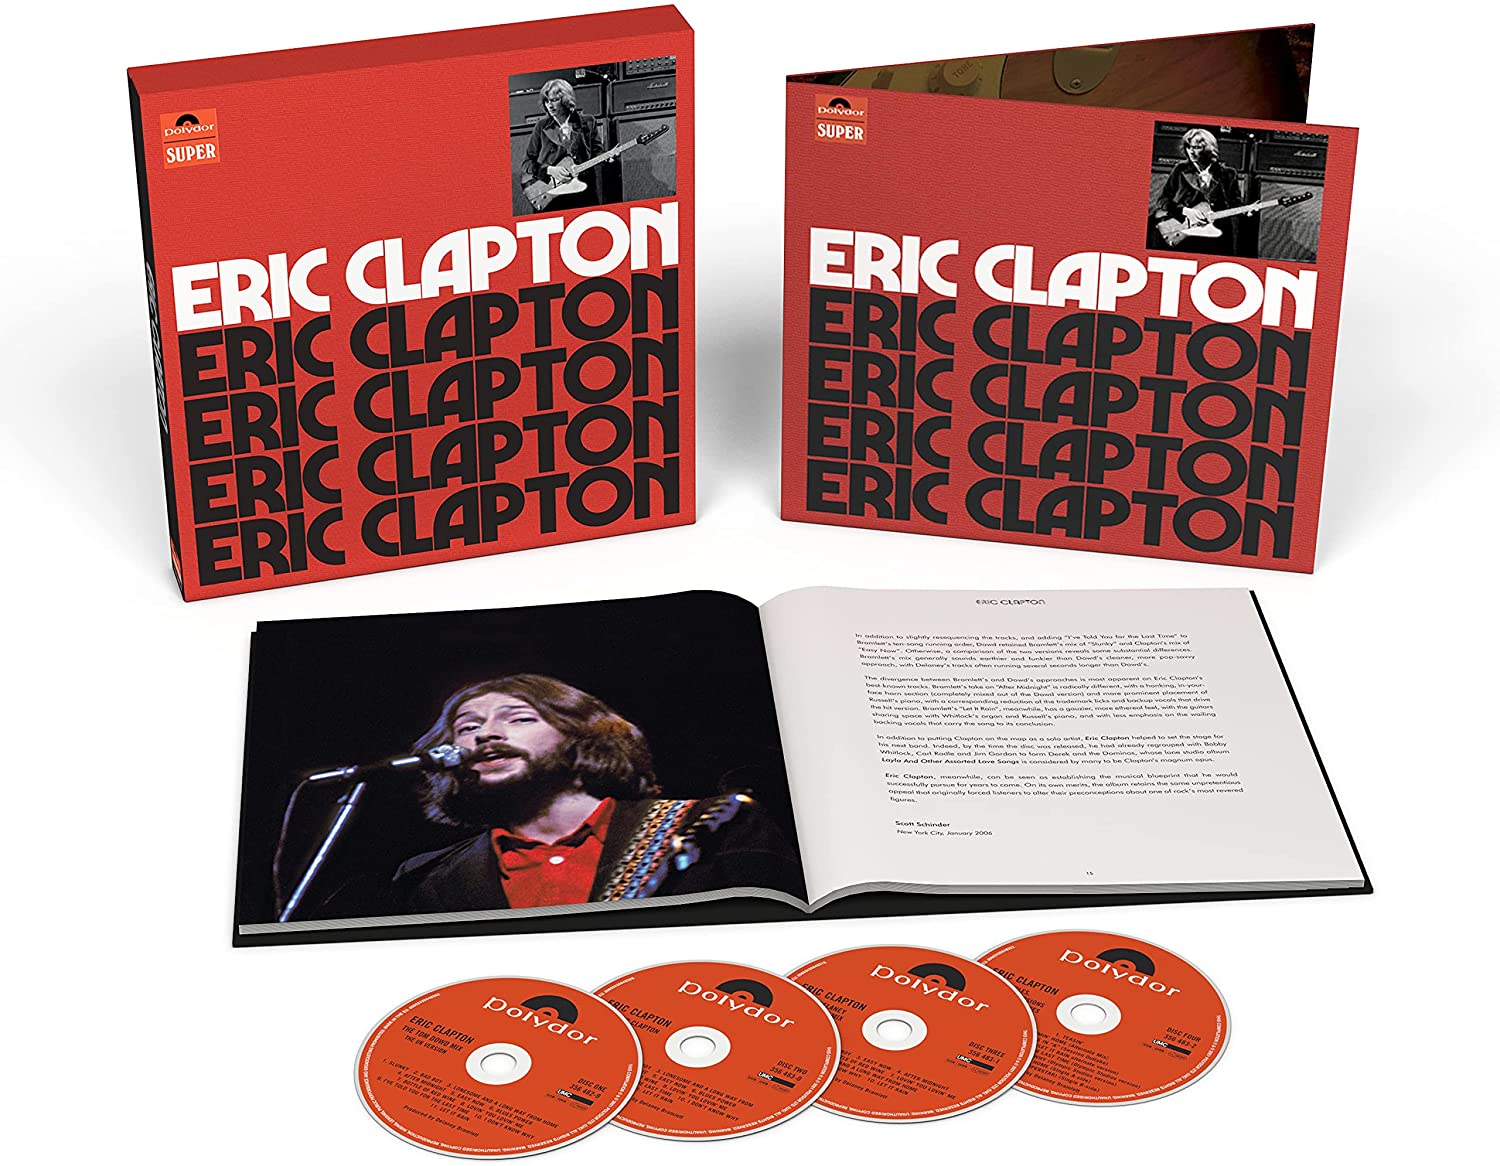 Eric Clapton deluxe edition – SuperDeluxeEdition